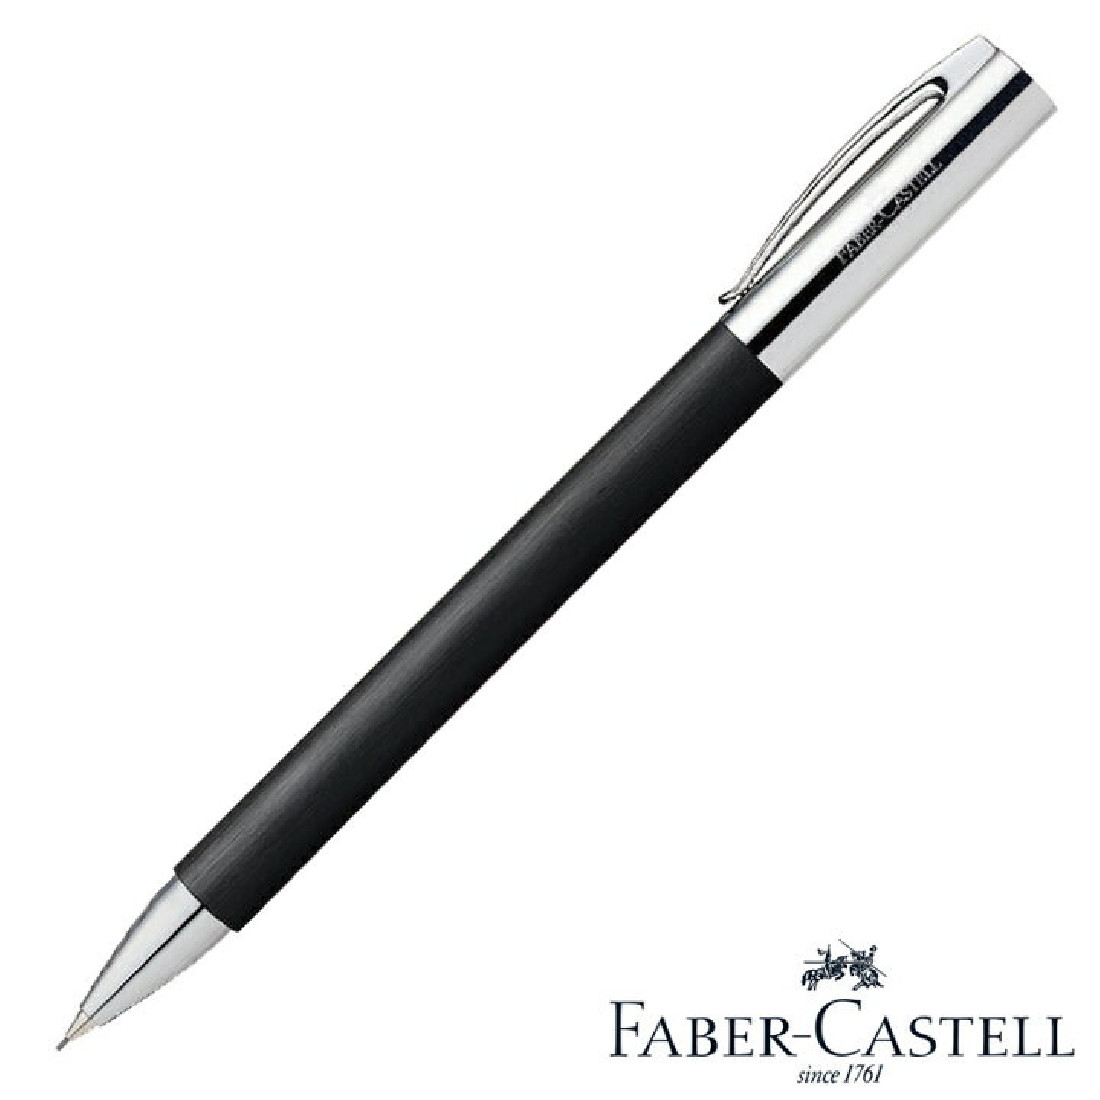 Faber Castell Ambition black 138130 mechanical pencil